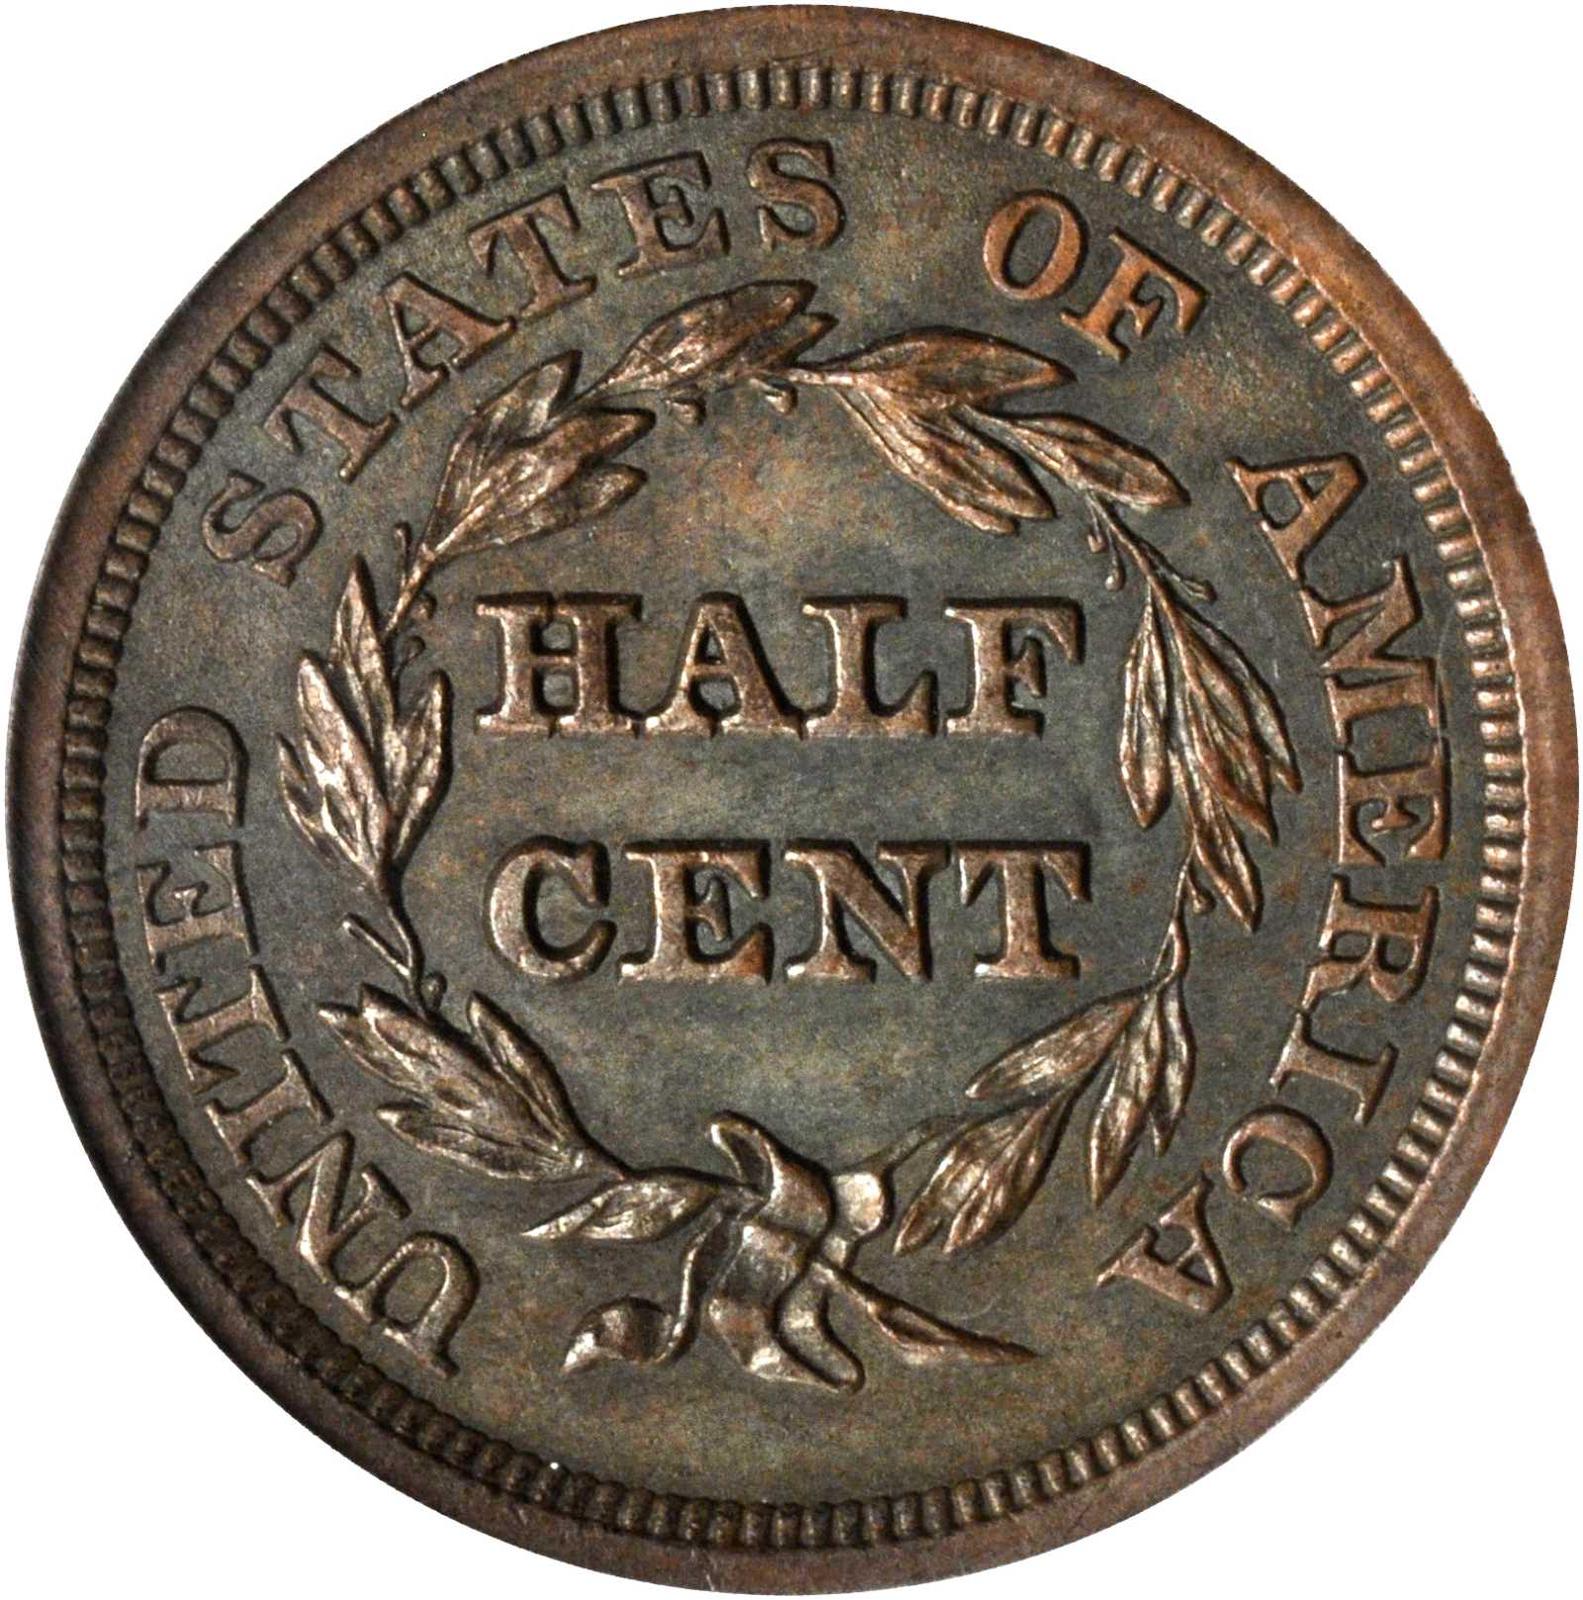 Value of 1854 Braided Hair Half Cent